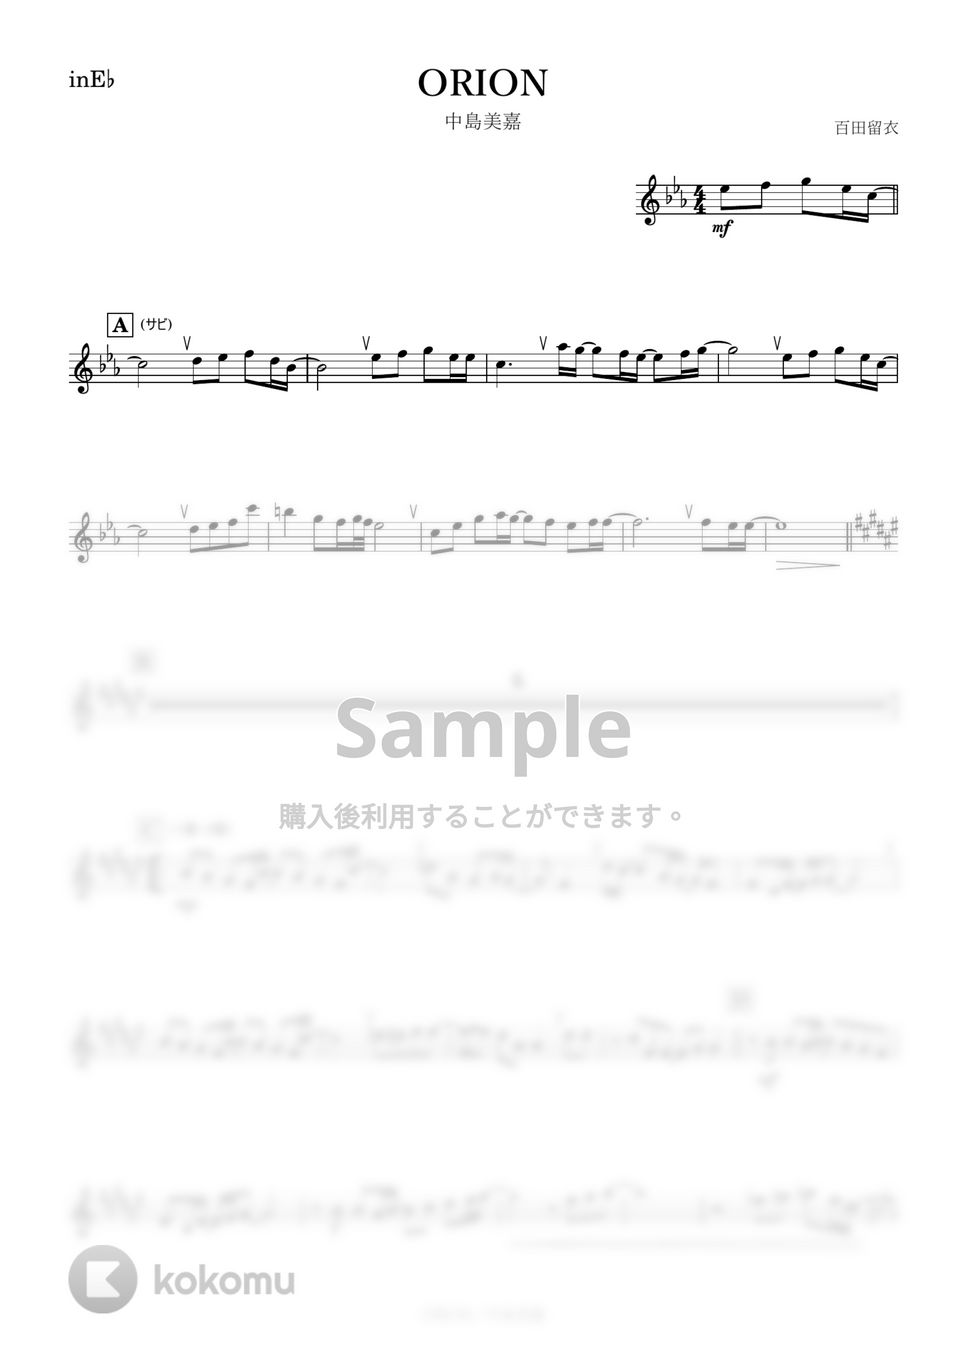 中島美嘉 - ORION (E♭) by kanamusic